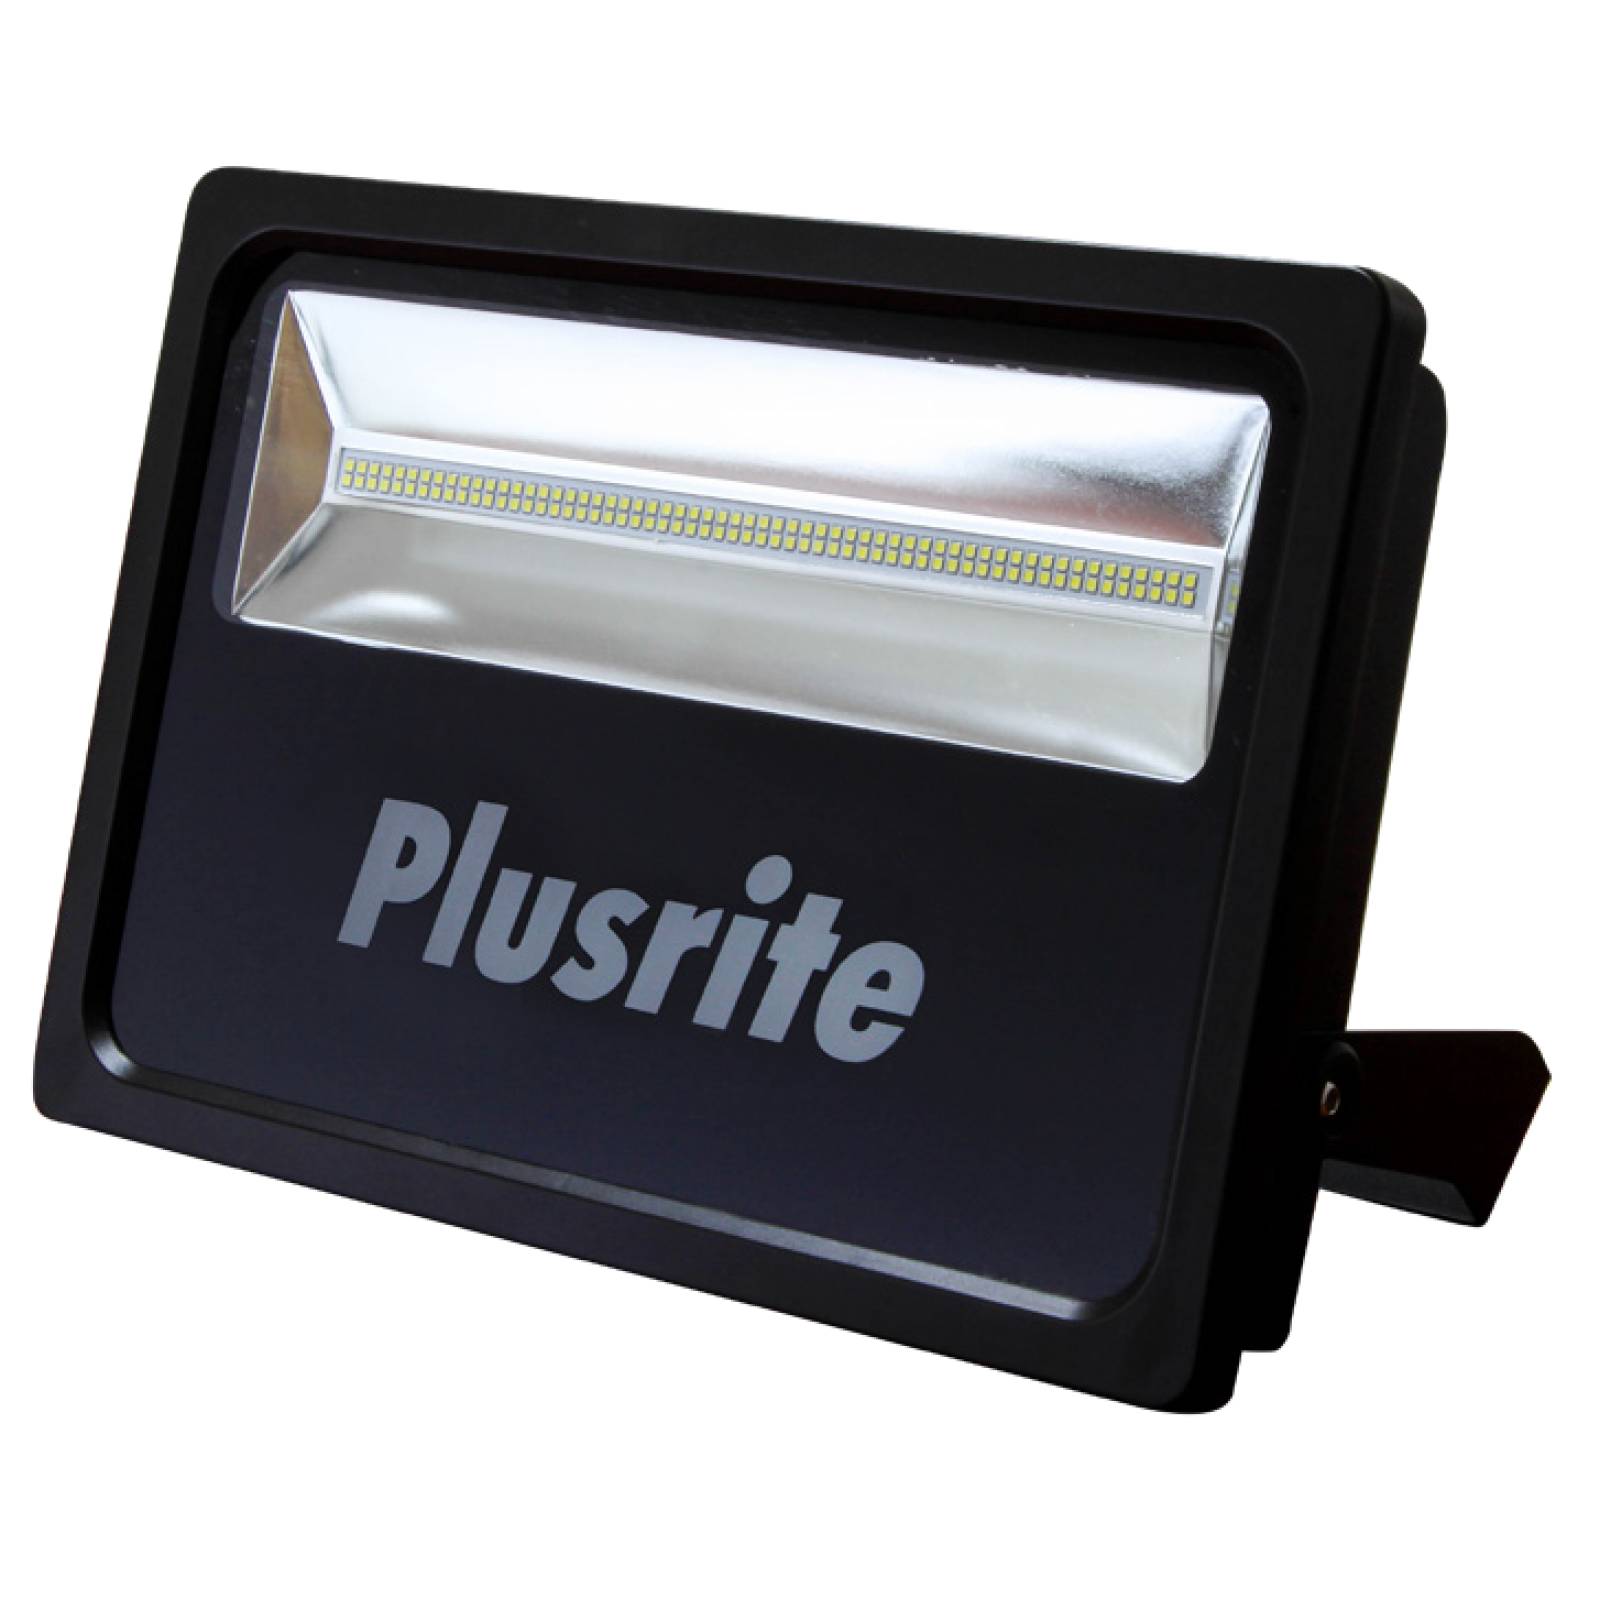 Reflector PLUSRITE LED 150W SMD delgado 6500K 12,750 Lm 